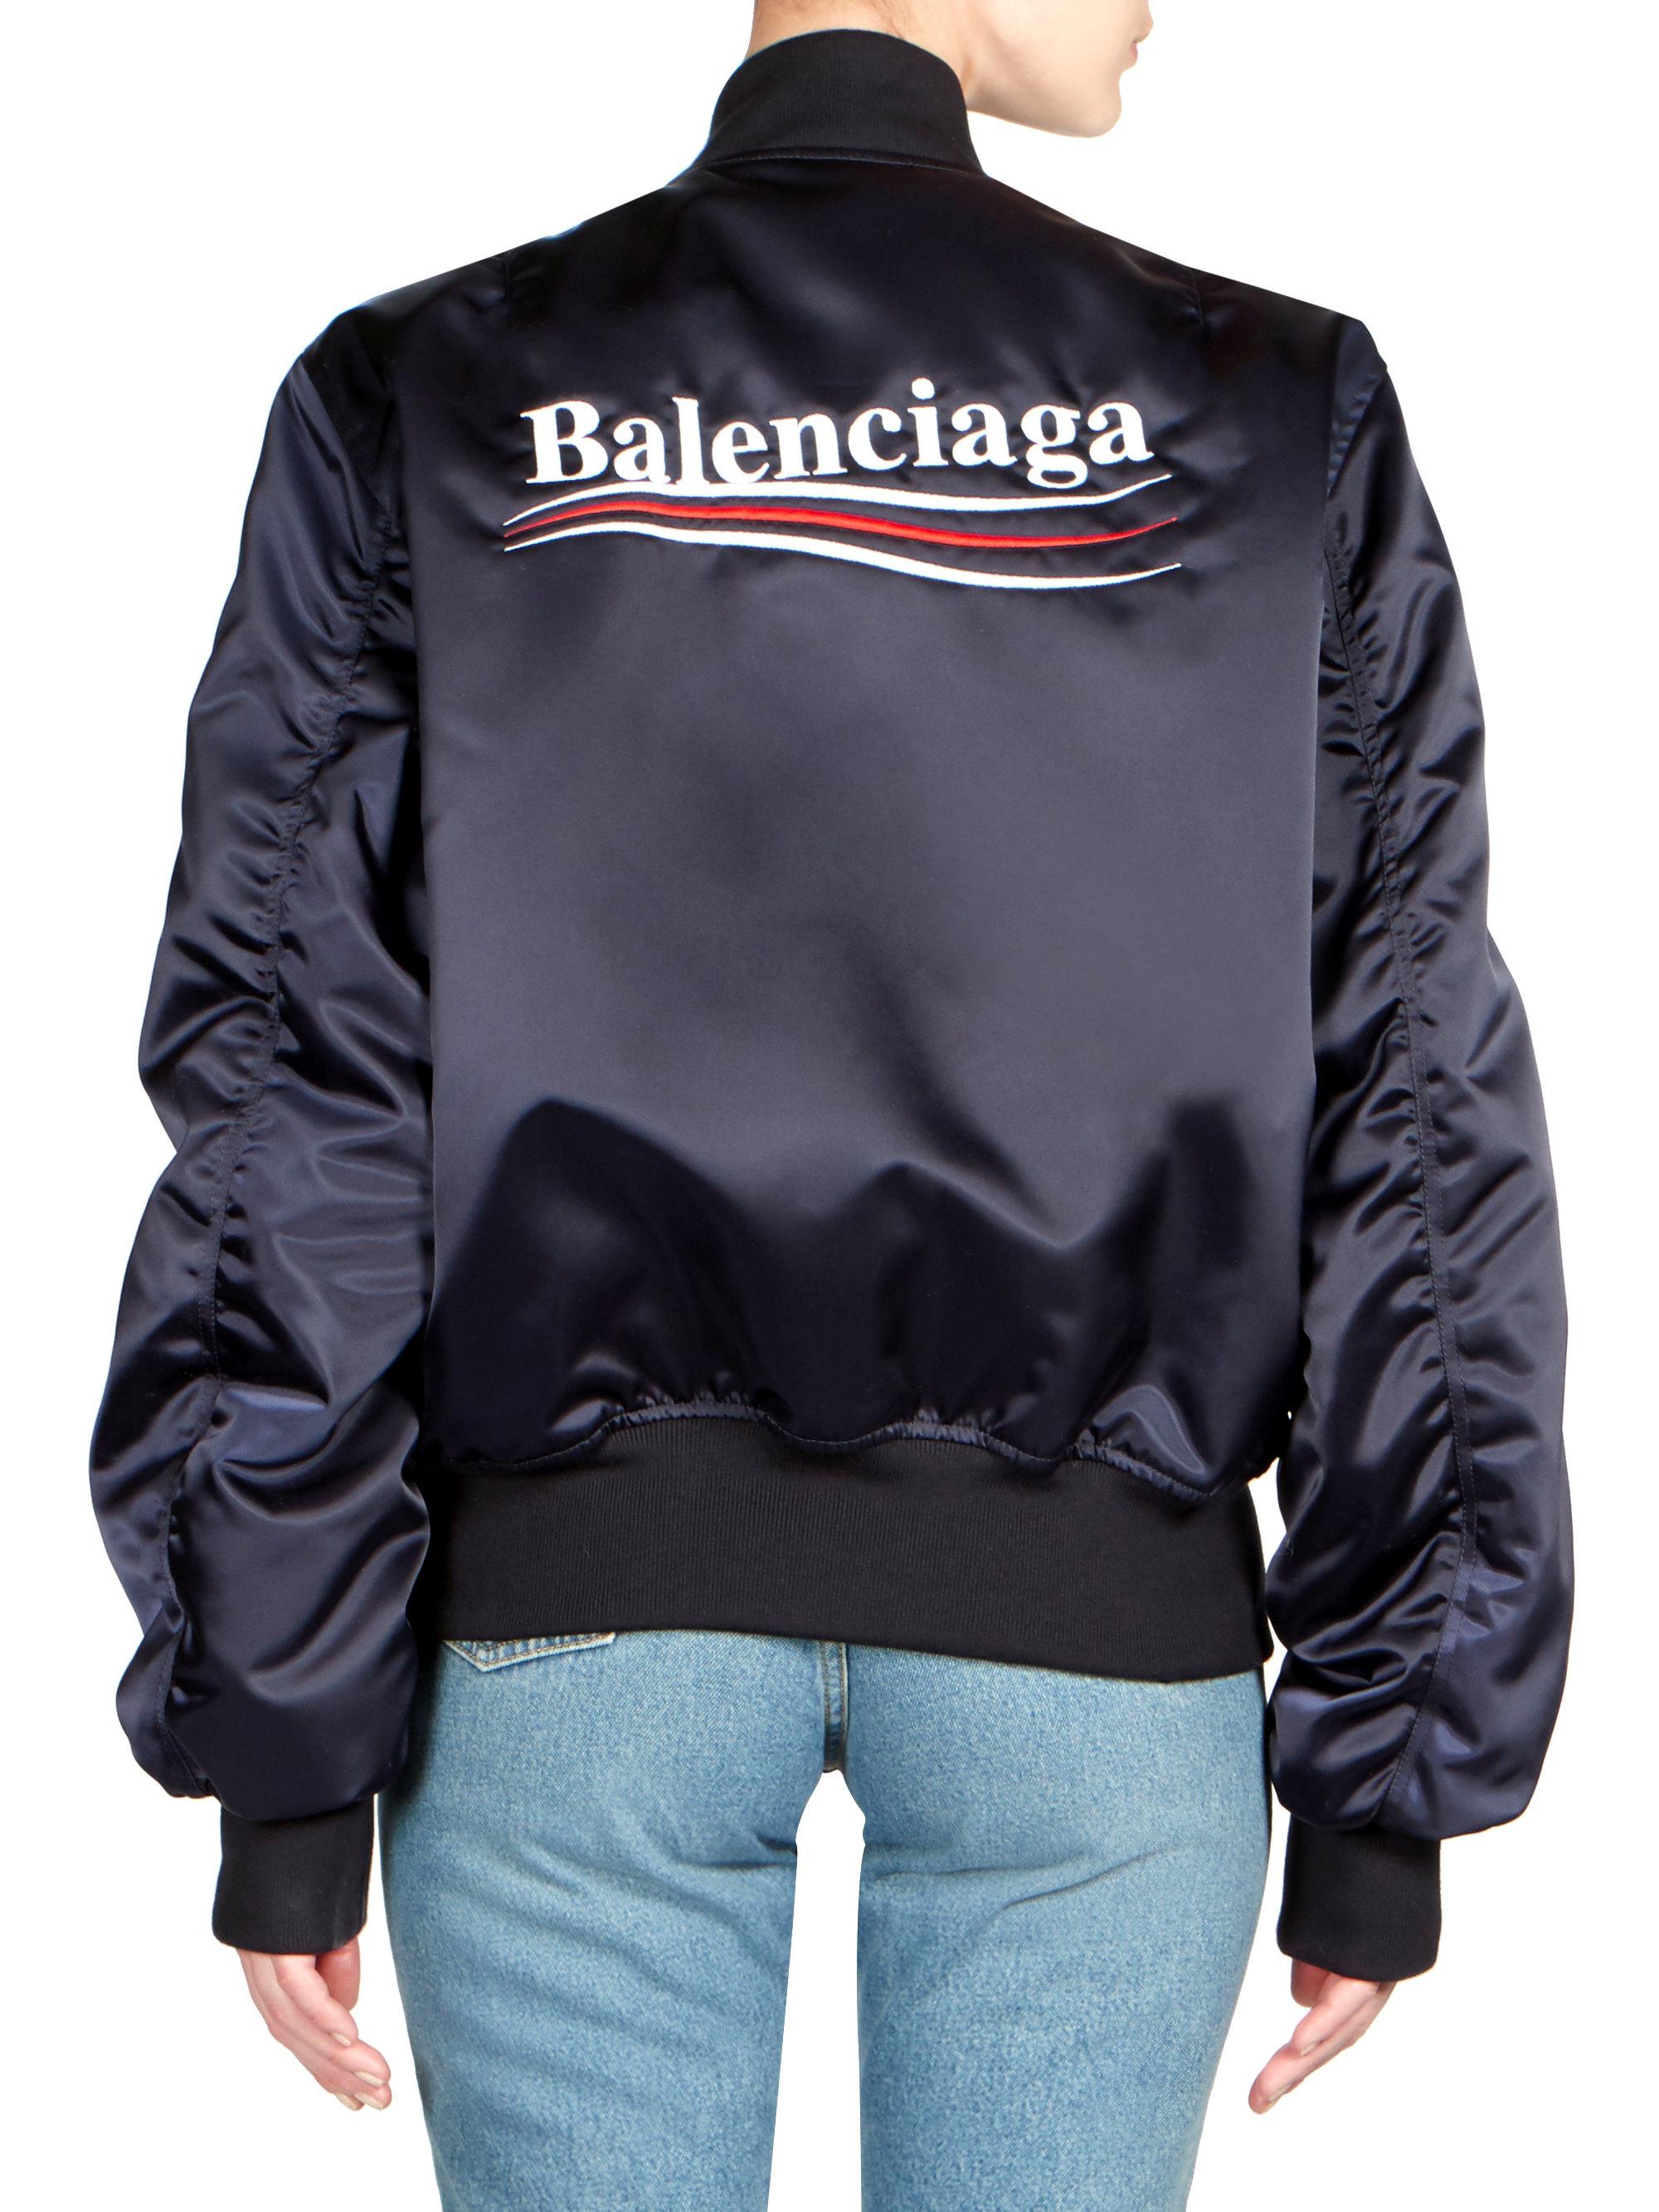 Balenciaga Campaign Bomber Jacket in 